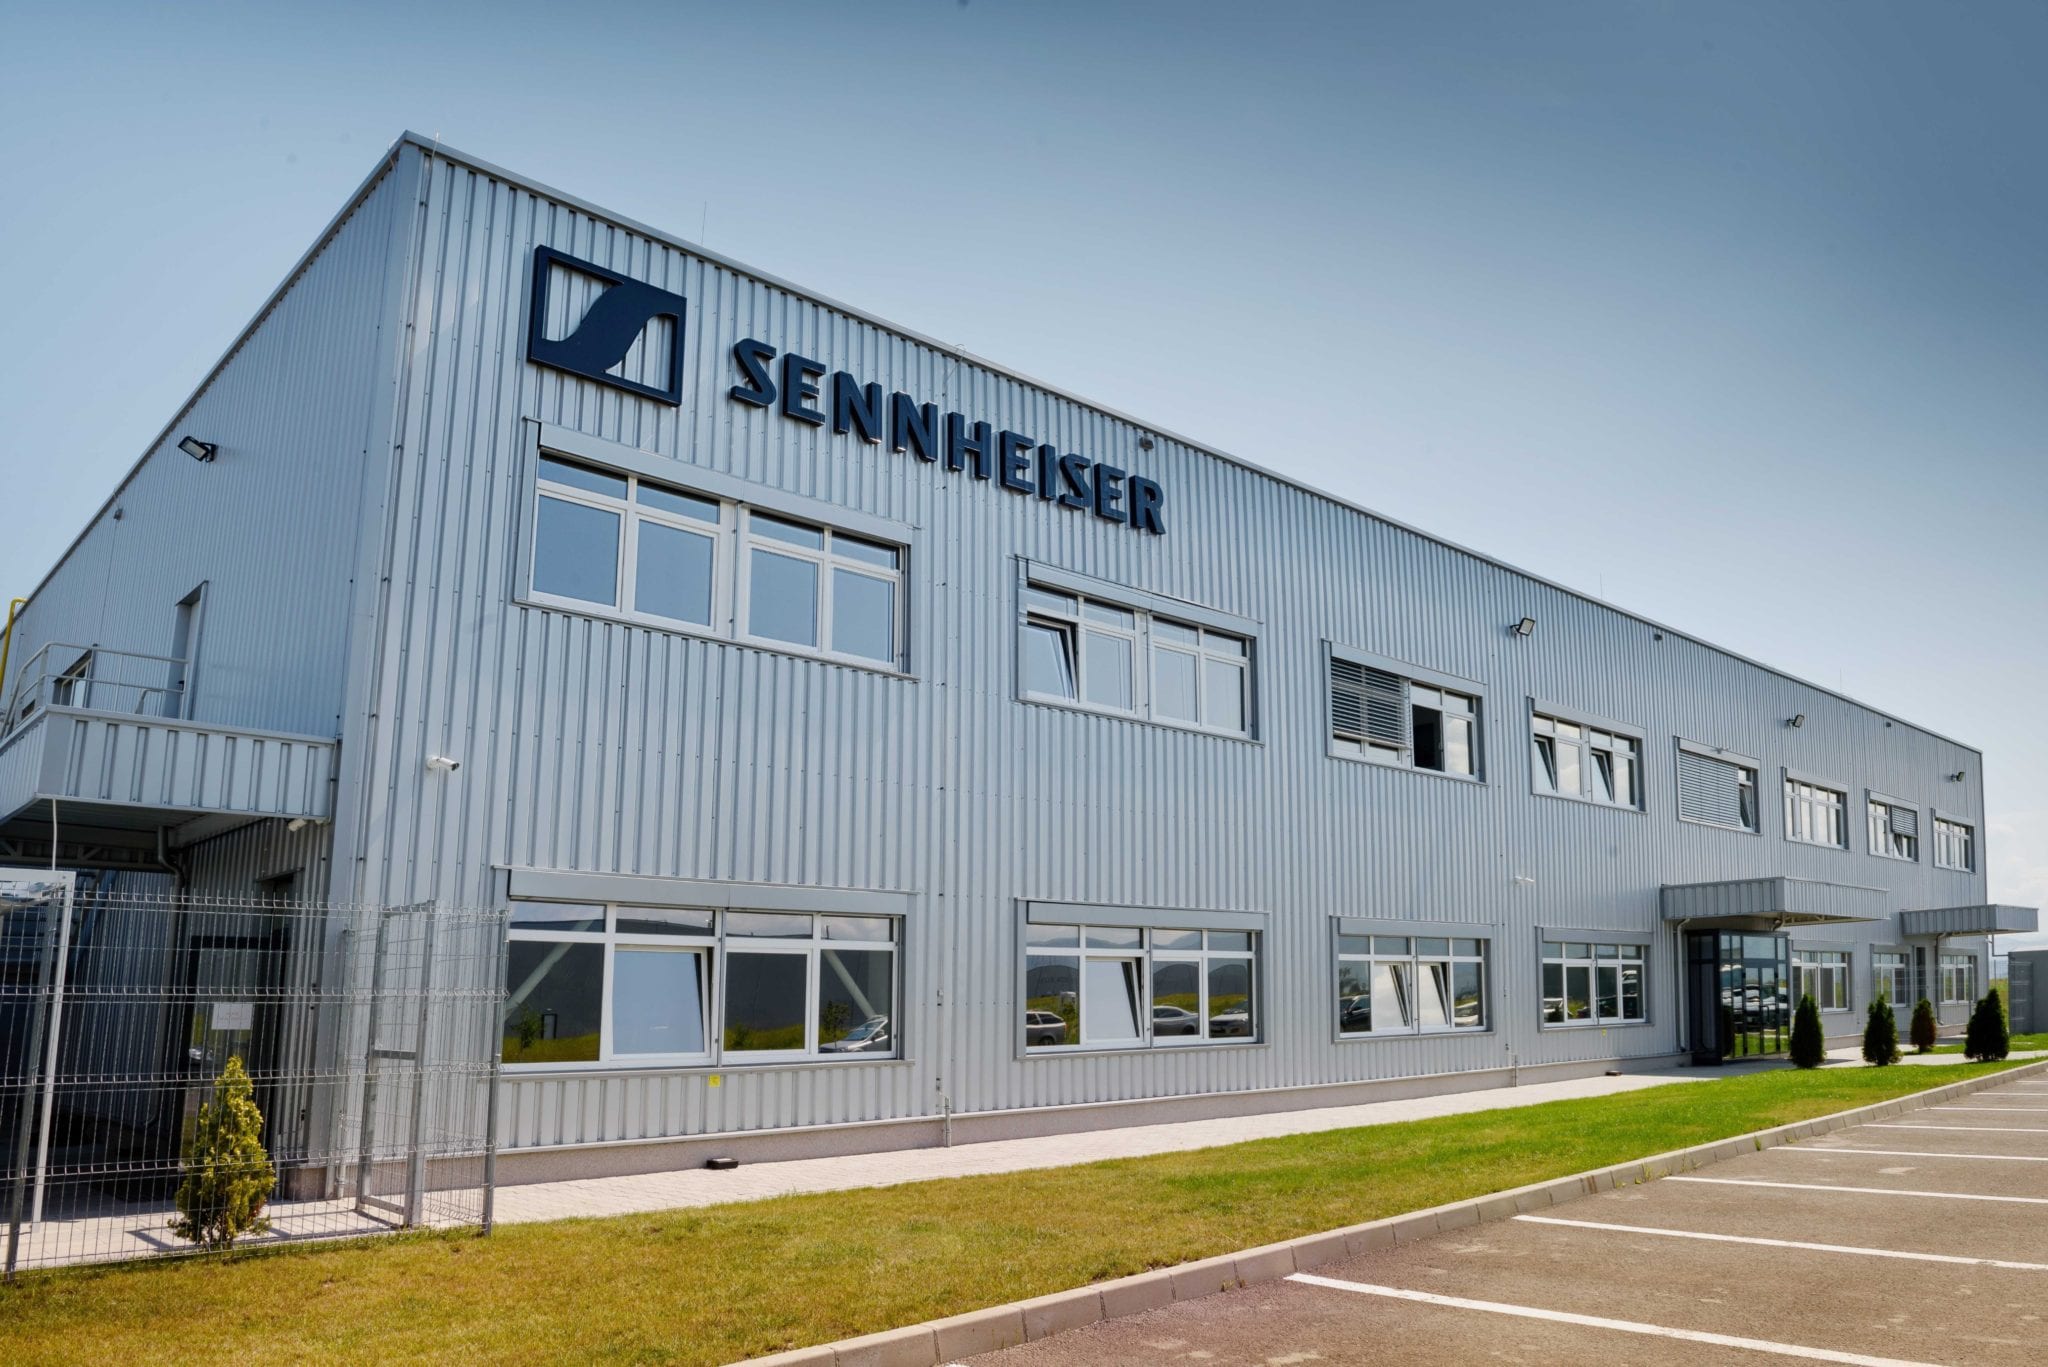 Seiheiser deschide oficial fabrica din Brașov